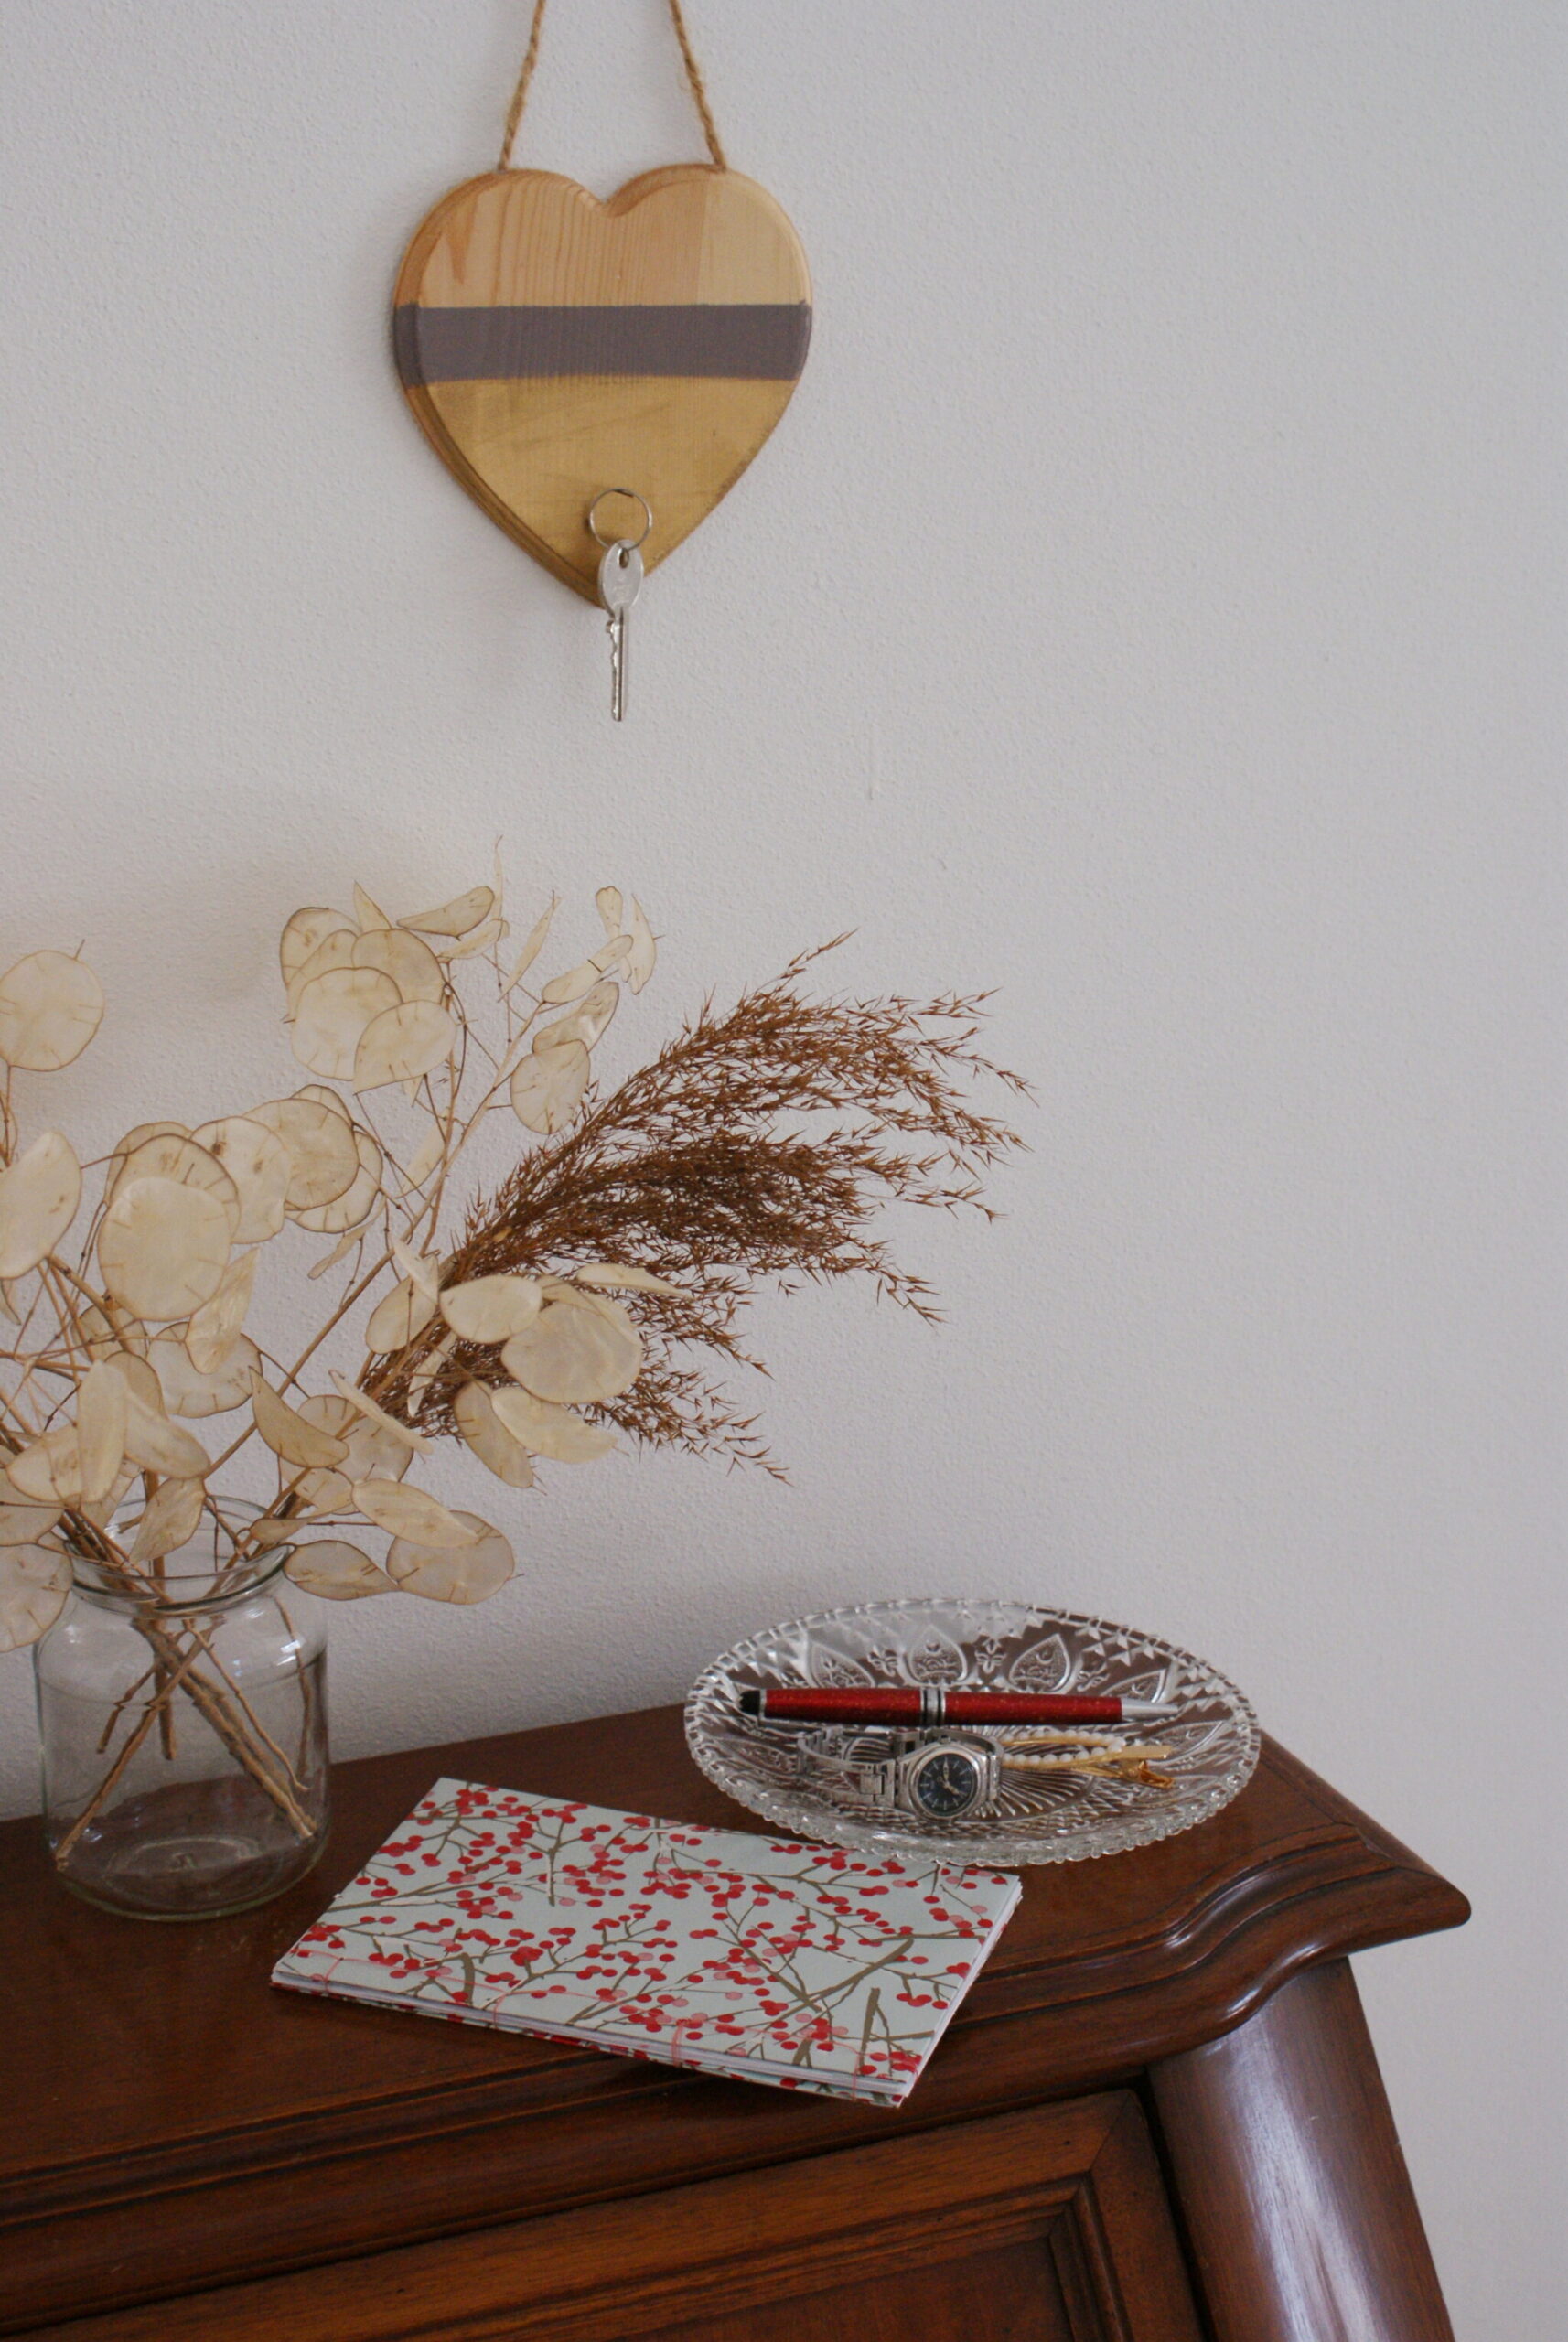 diy minimalist neutral hanging key holder wood entryway home decor valentine day gift idea handmade francinesplaceblog